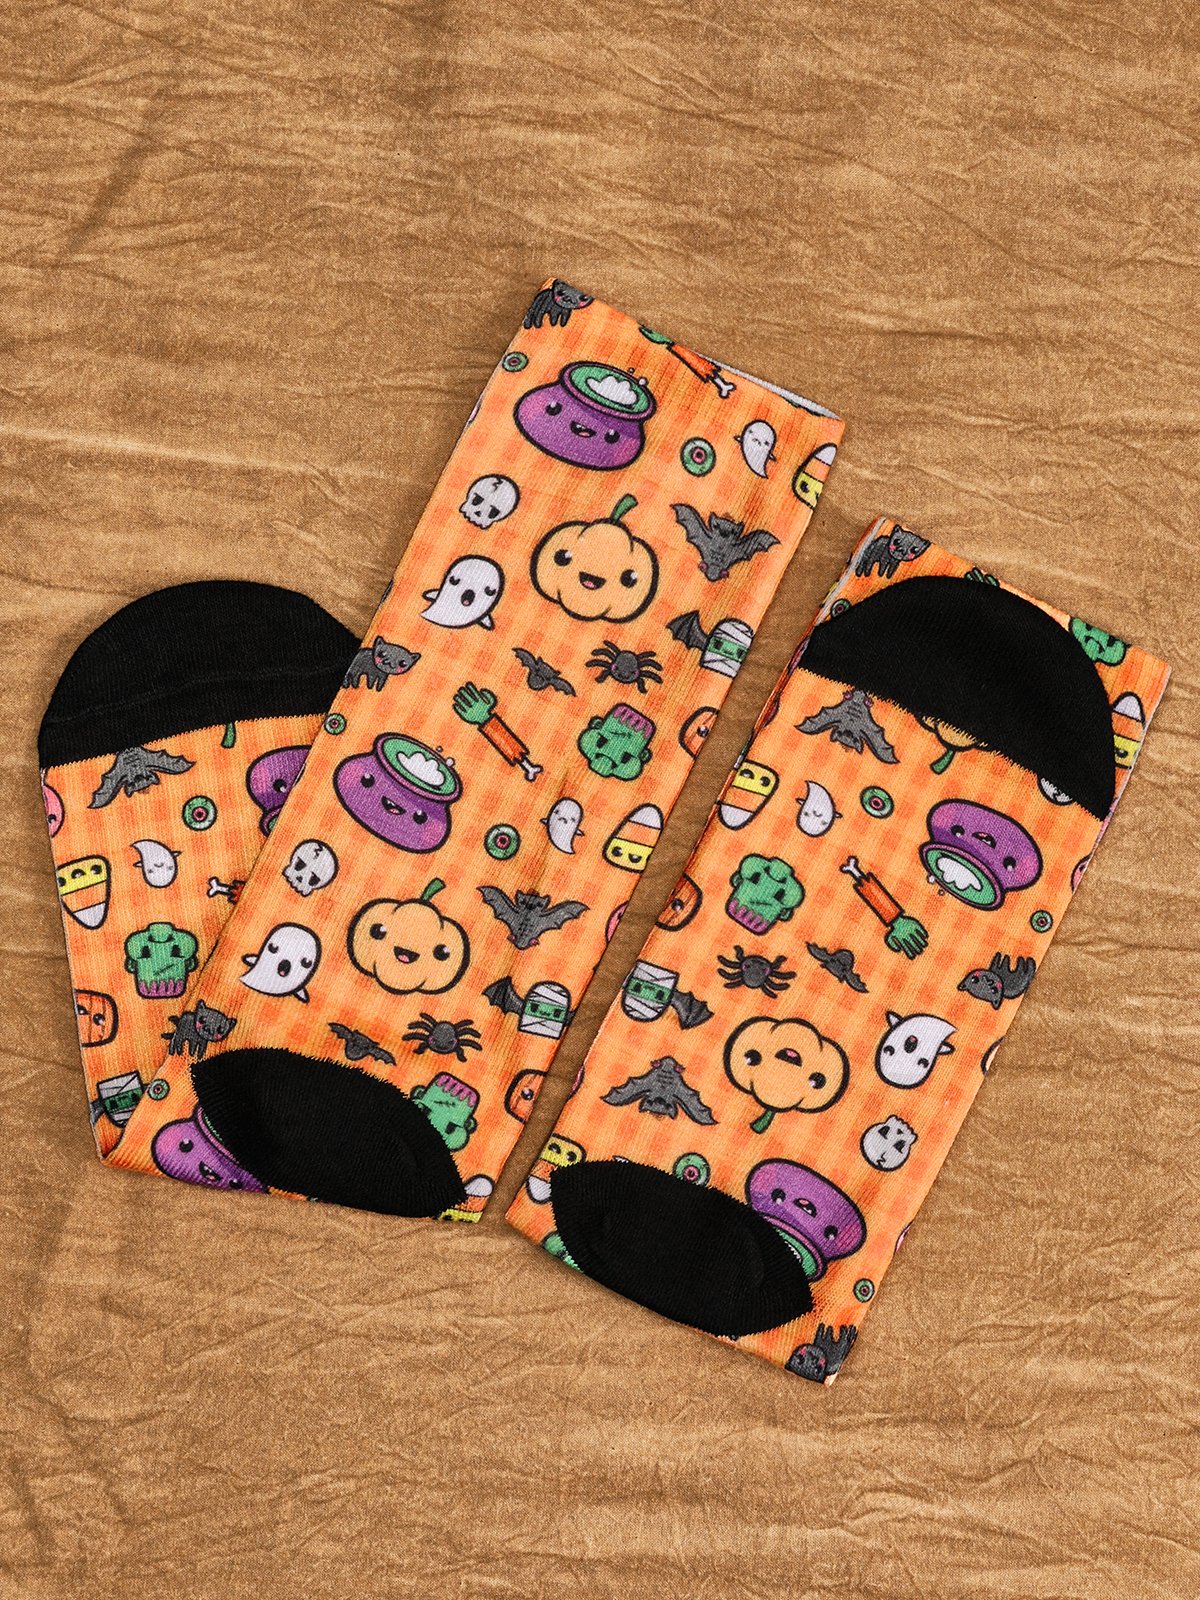 Street All Season Halloween Cotton Printing Holiday Halloween Over the Calf Socks Regular Socks for Women